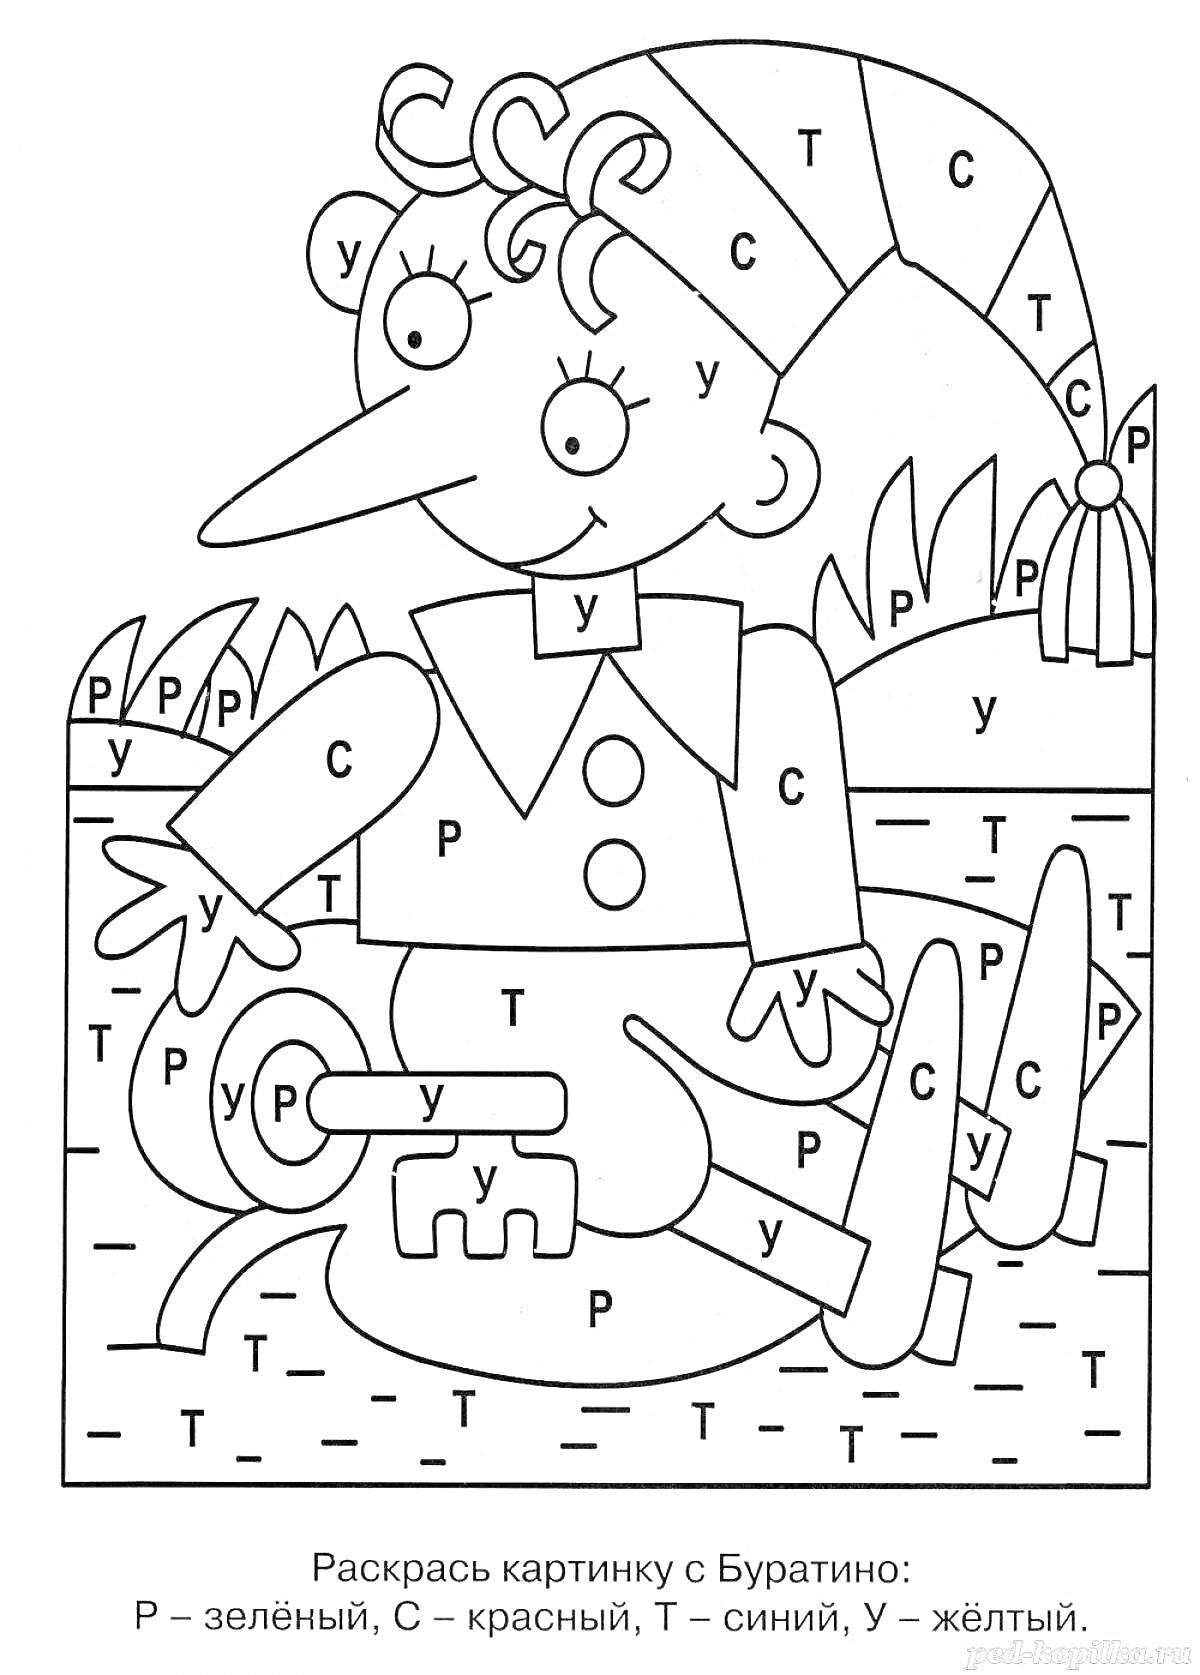 Раскраска Раскраска с Буратино в шляпе и жилете с пуговицами, с ключом в руках, сидящий на траве